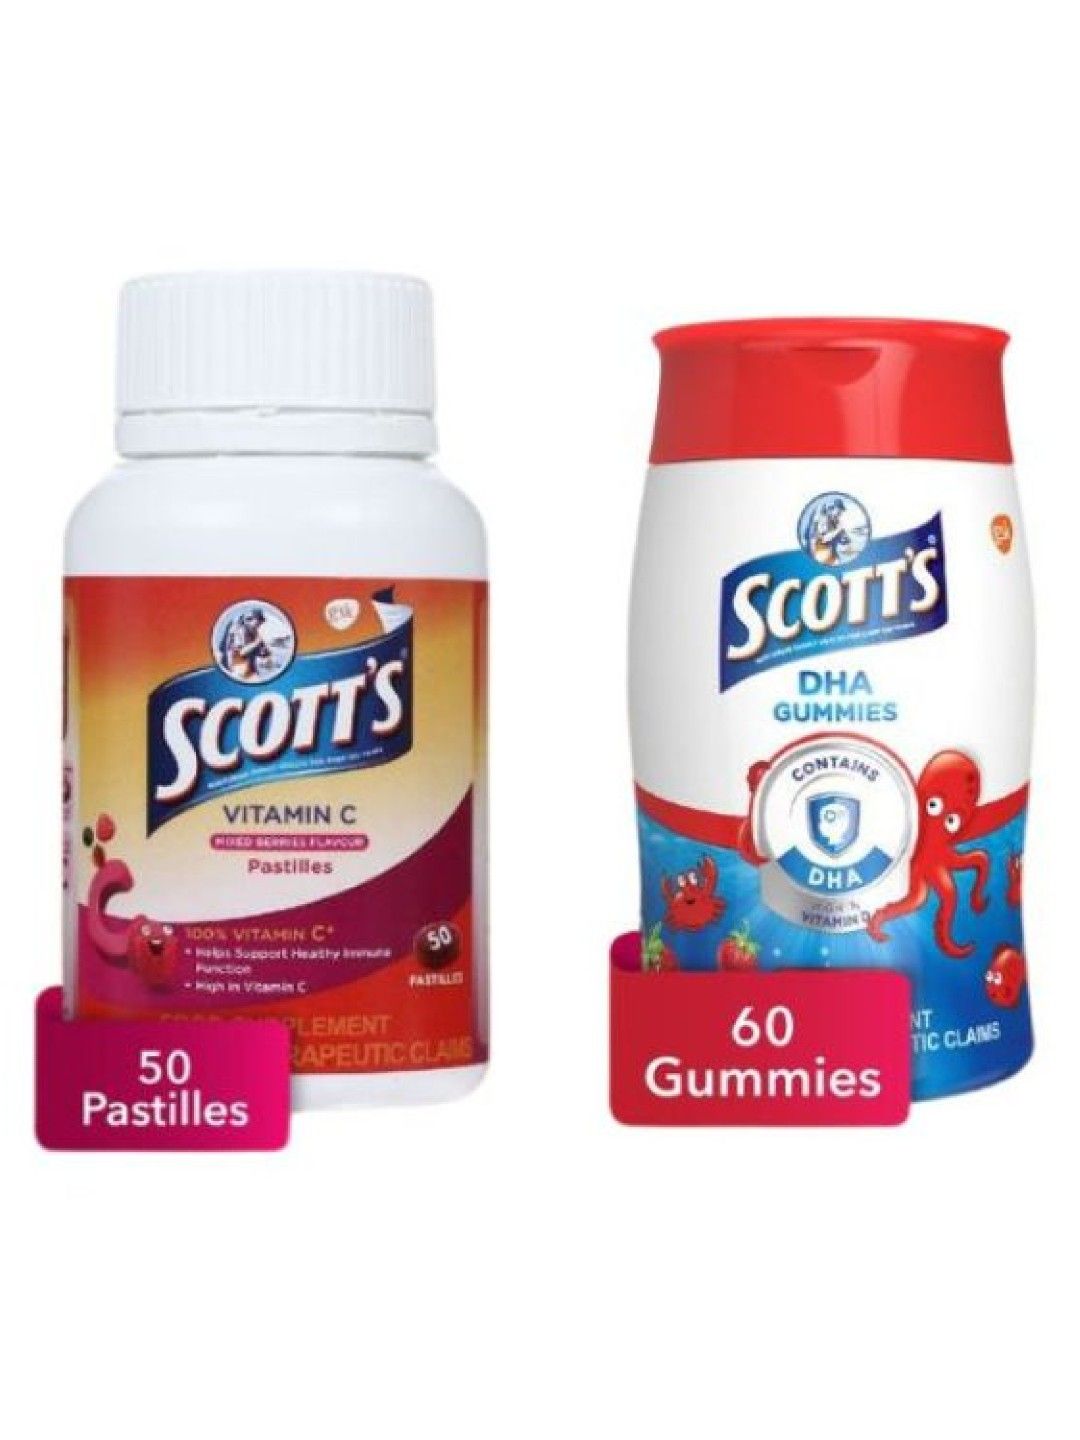 Scott's Vitamin C Pastilles Mixed Berries Flavour (50s) & DHA Gummies Strawberry (60s)